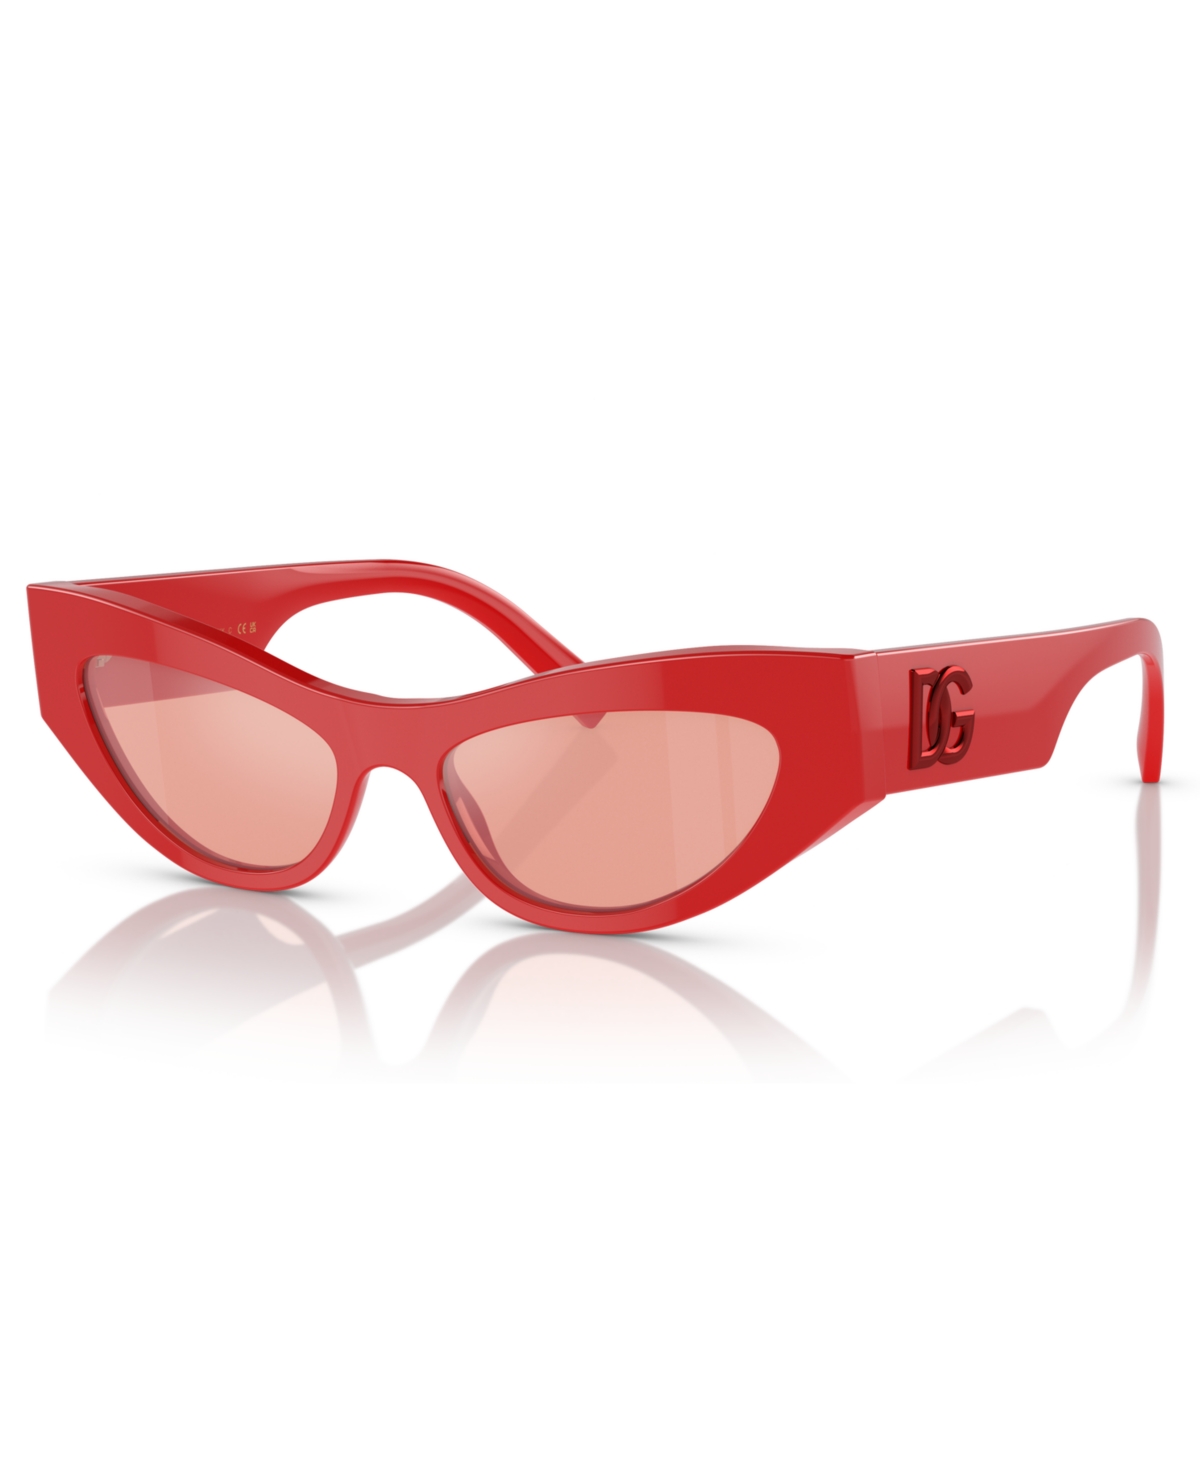 Dolce&Gabbana Women's Sunglasses, Mirror DG4450 - Red